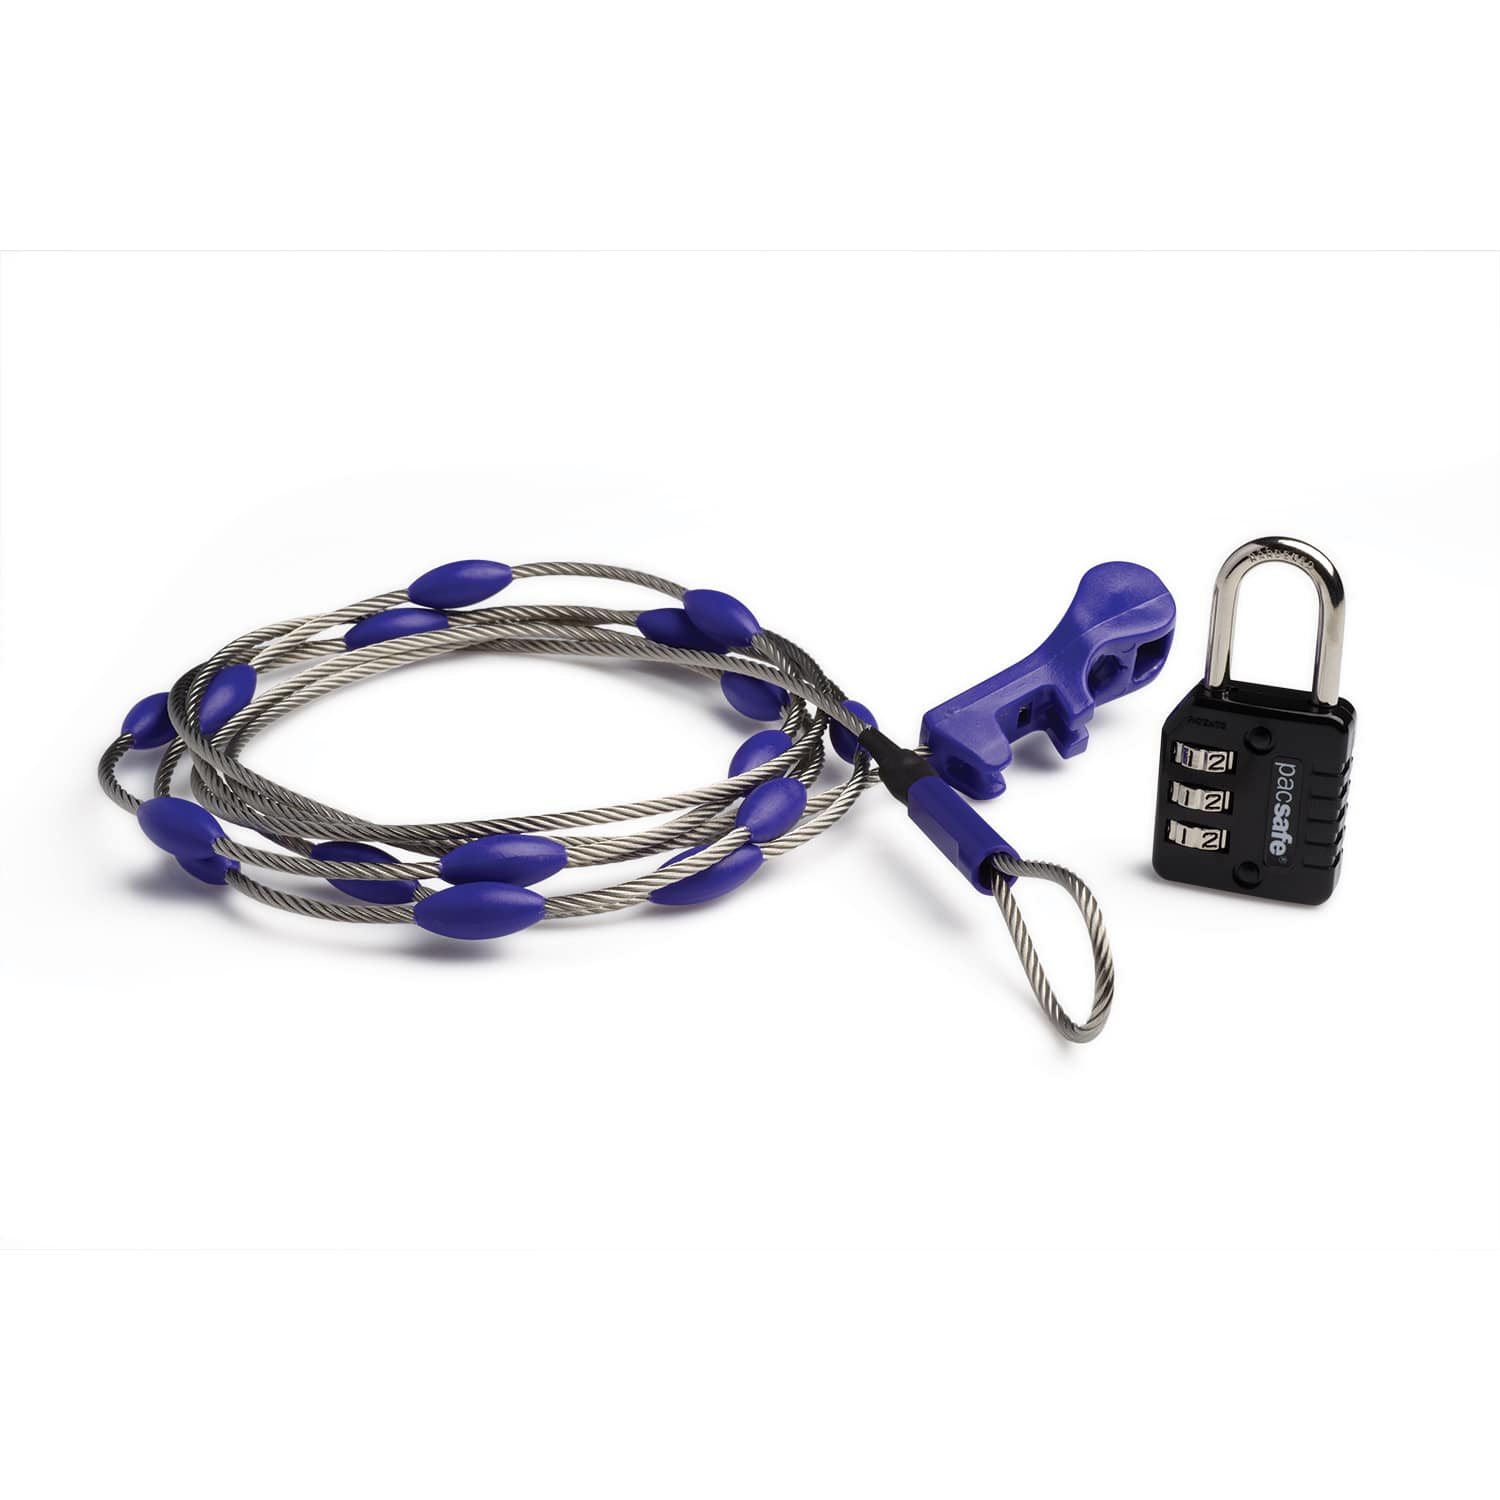 Pacsafe - Wrapsafe adjustable cable lock